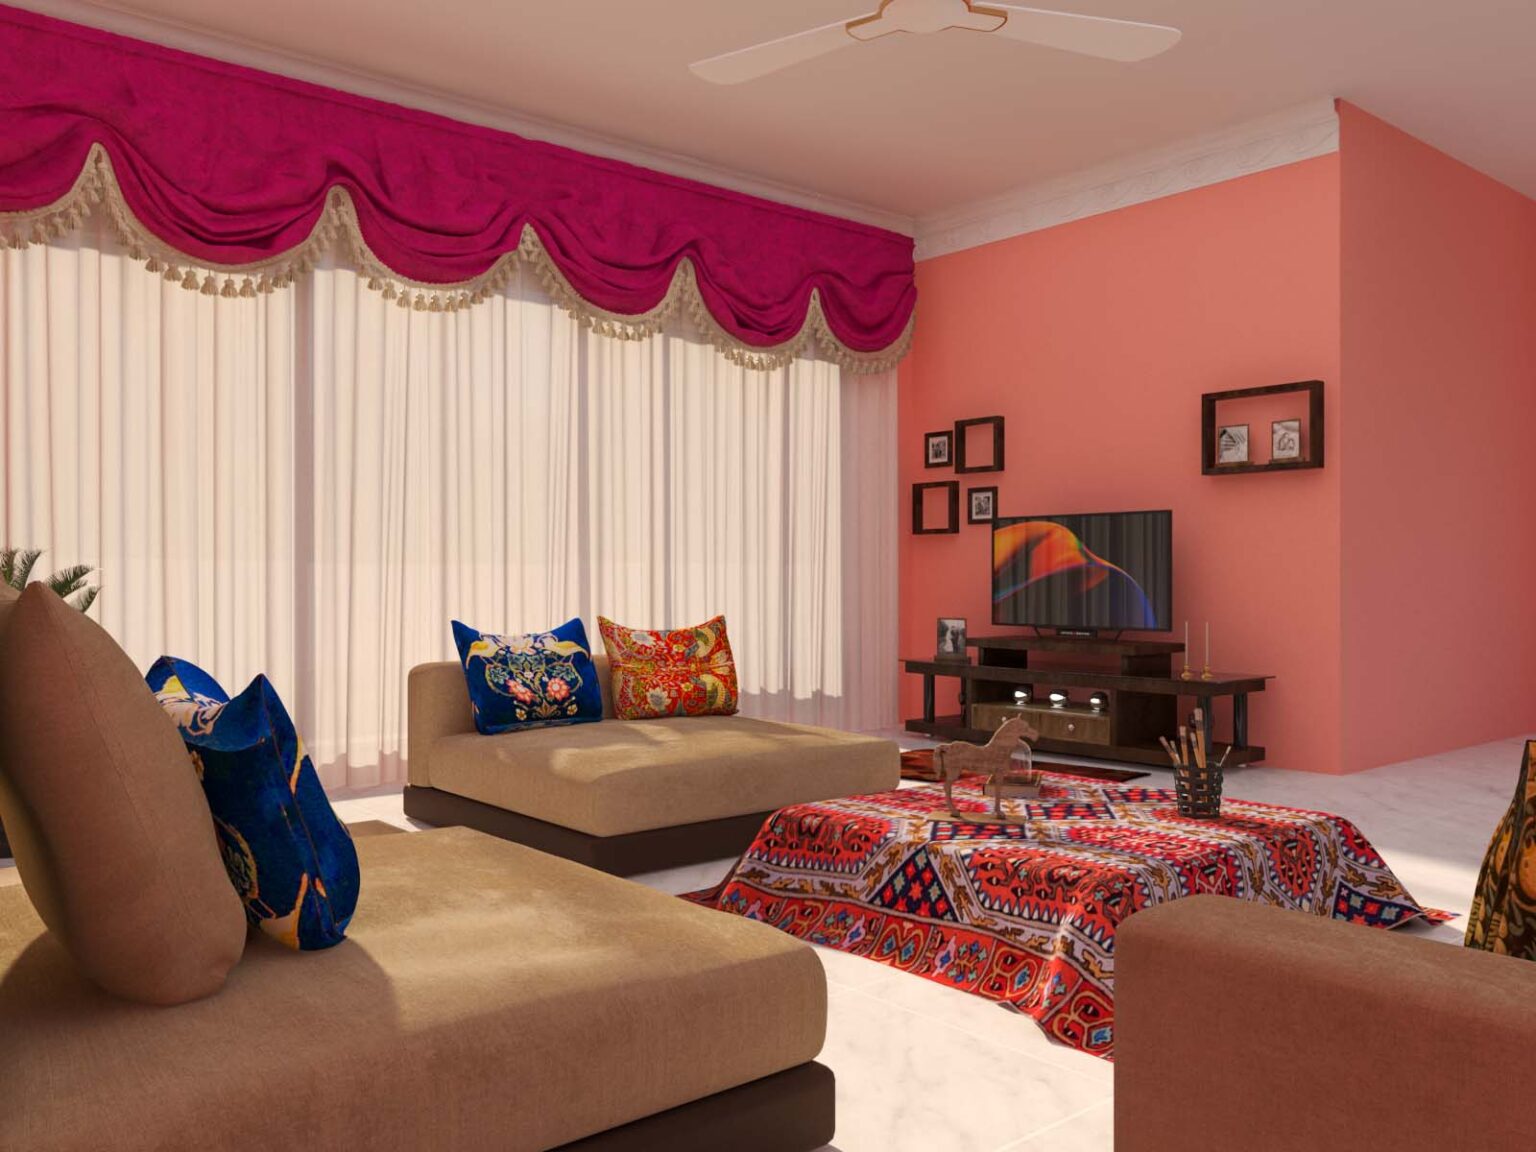 rajasthani showpiece for living room